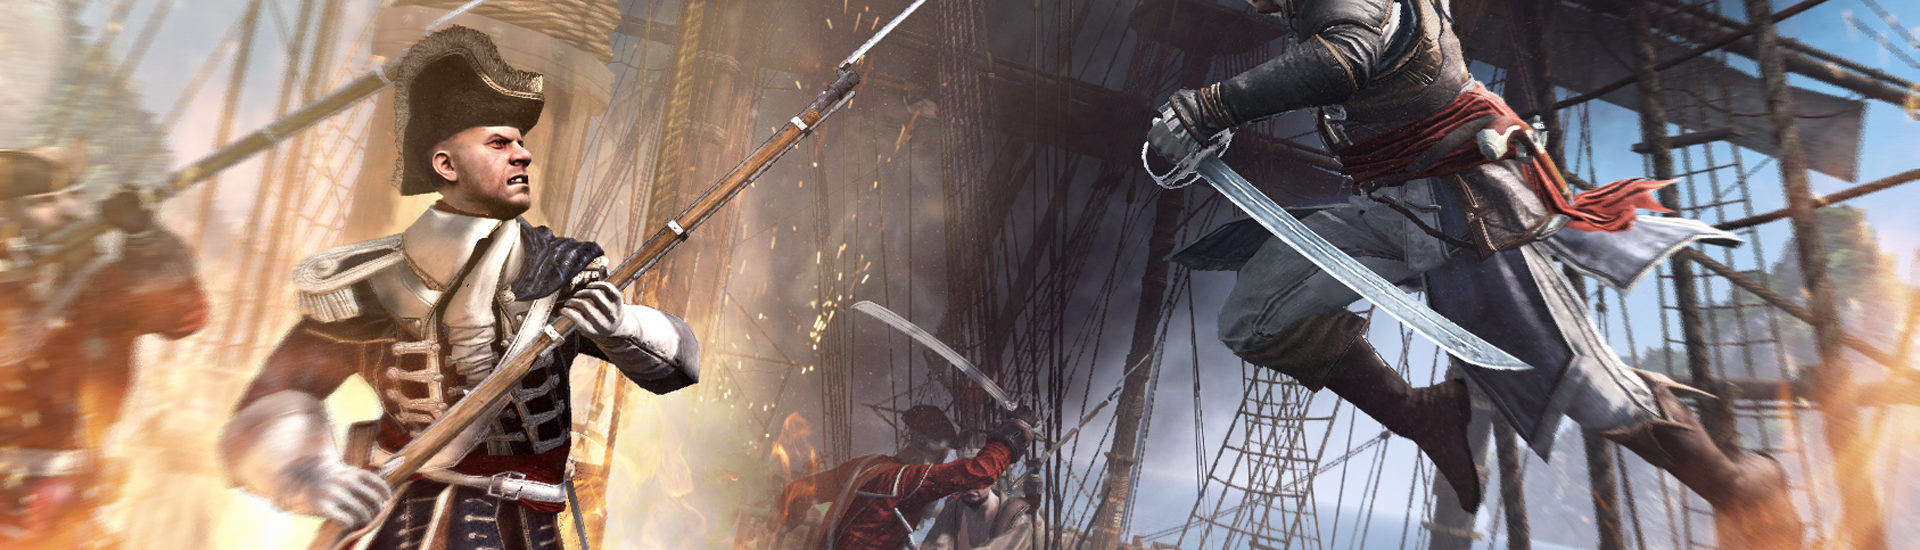 Assassins’s Creed IV: Wird das Piratenabenteuer neu aufgelegt?